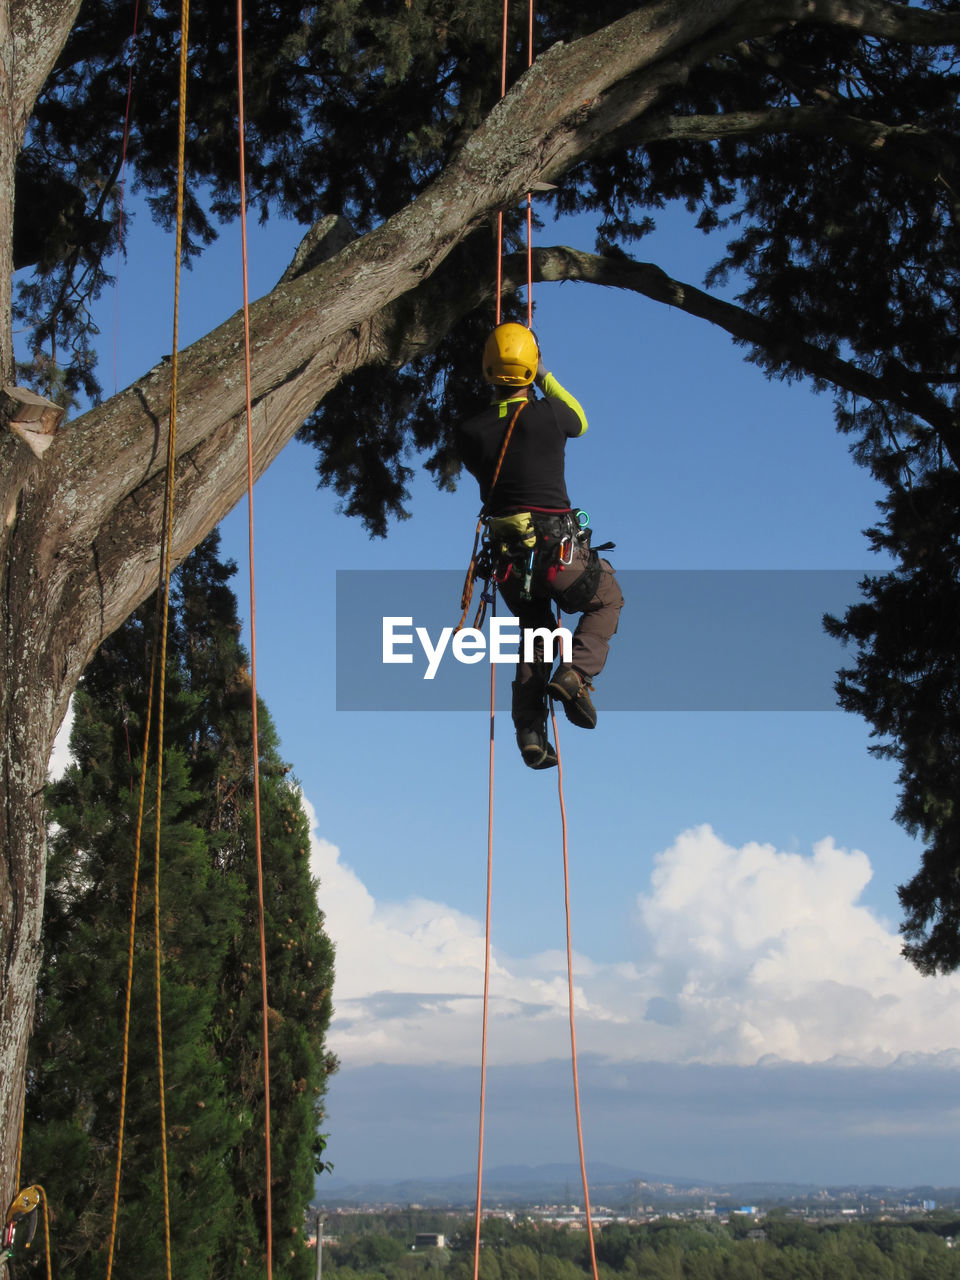 Tree surgeon lumberjack hanging from a big tree